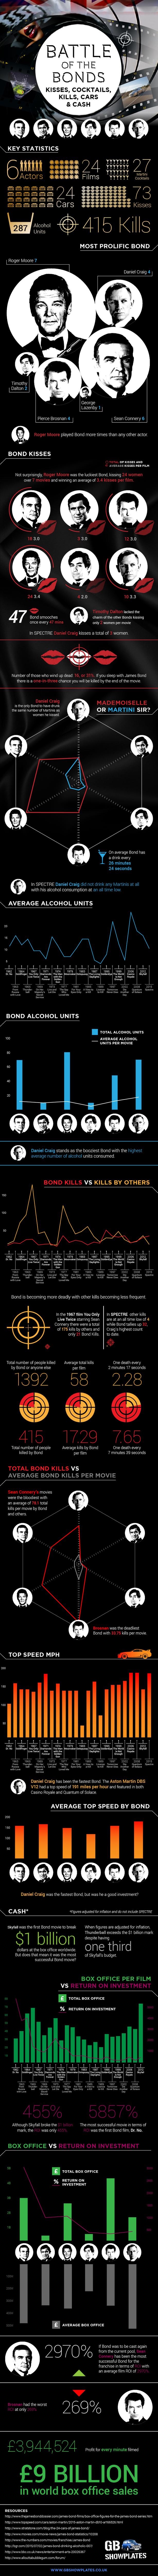 James-Bond-Infographic